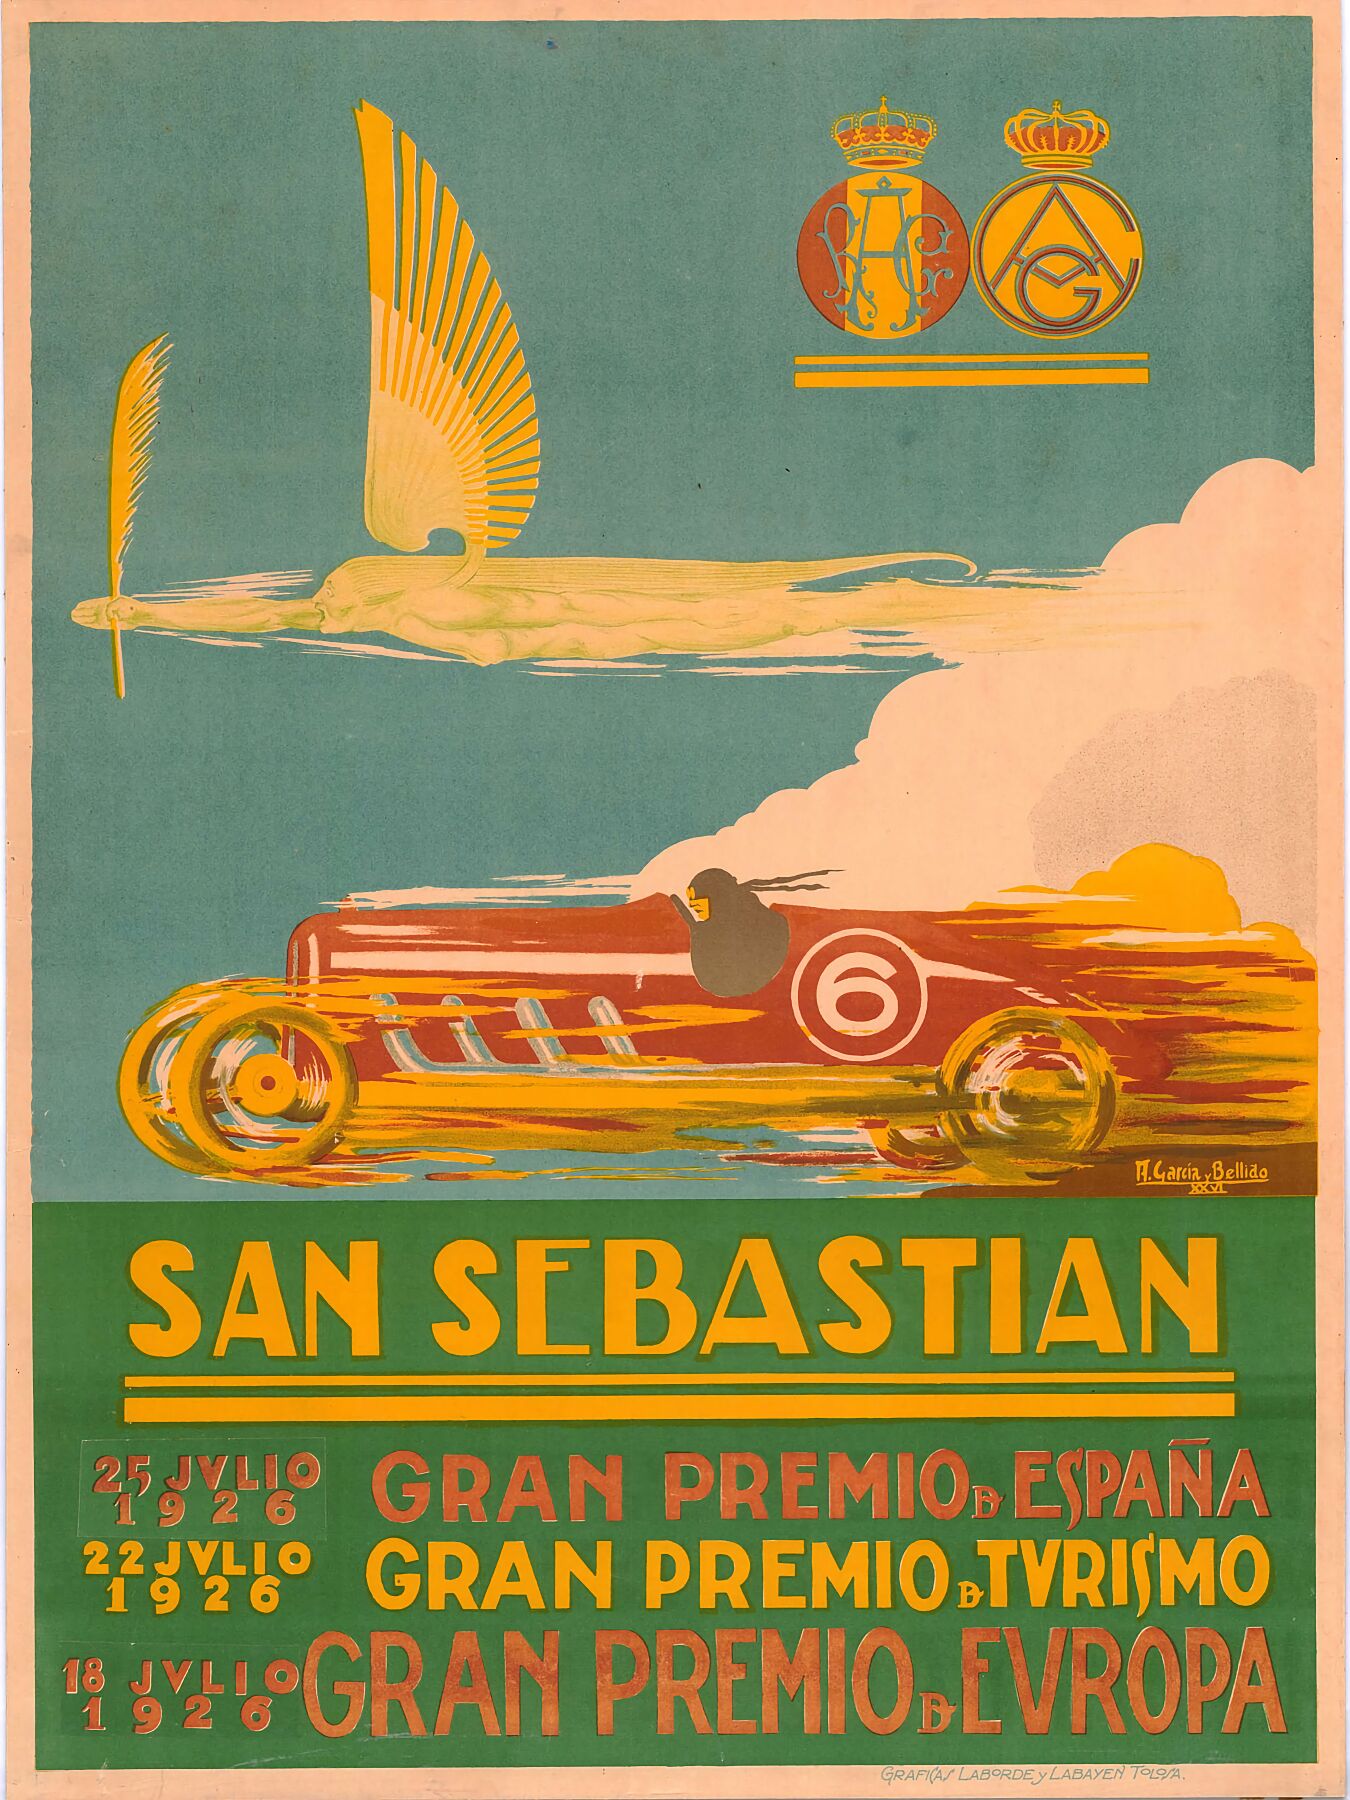 Poster for the 1926 San Sebastian Grand Prix